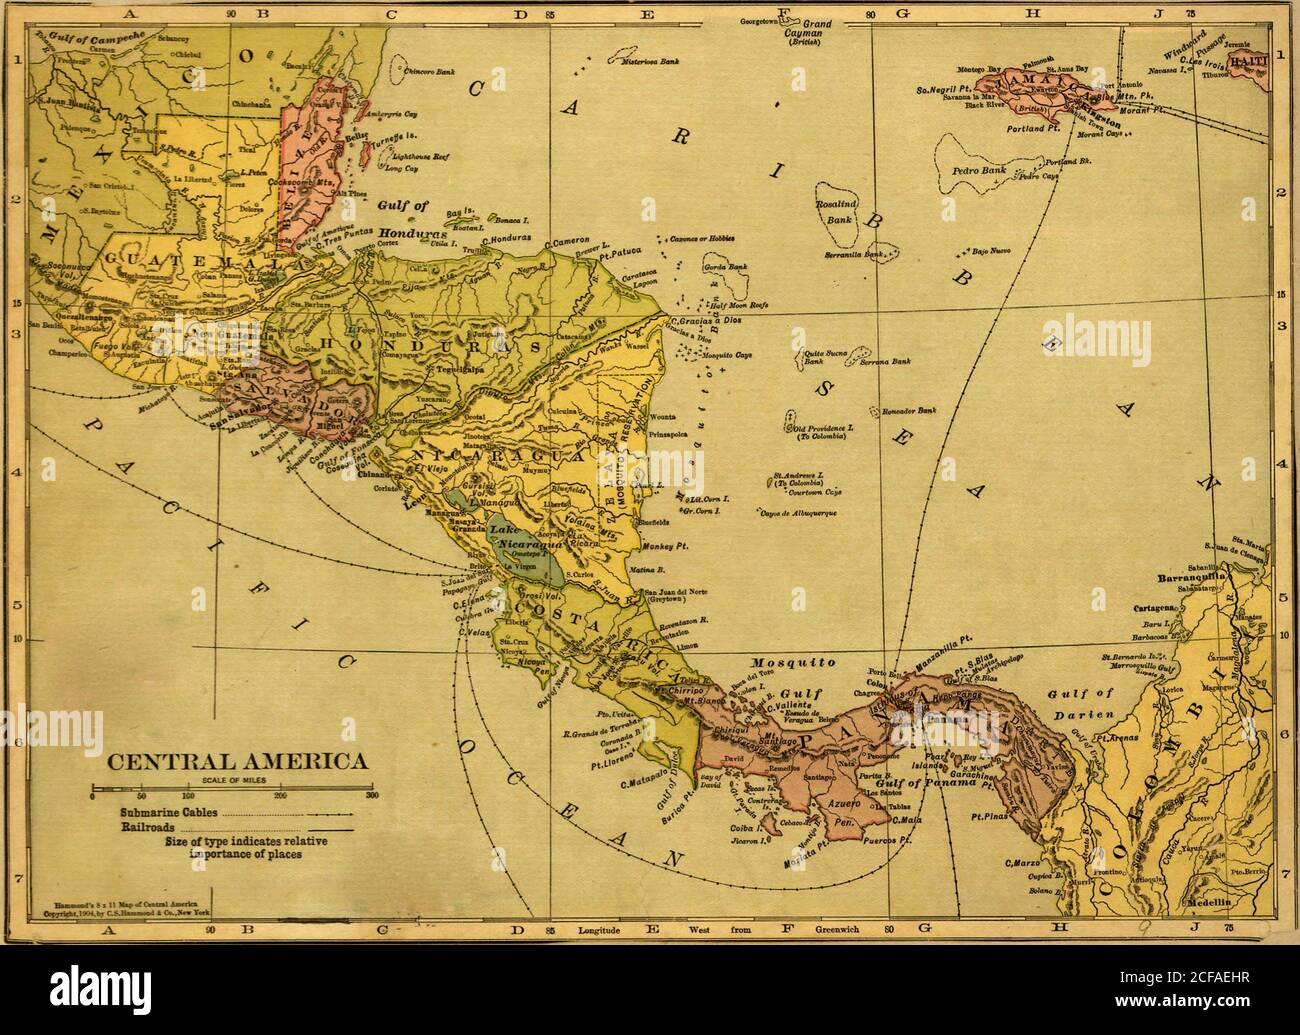 Le Panama, le Costa Rica, Hondouras, le Guatemala, Salvador, Honduras britannique -1904 Banque D'Images